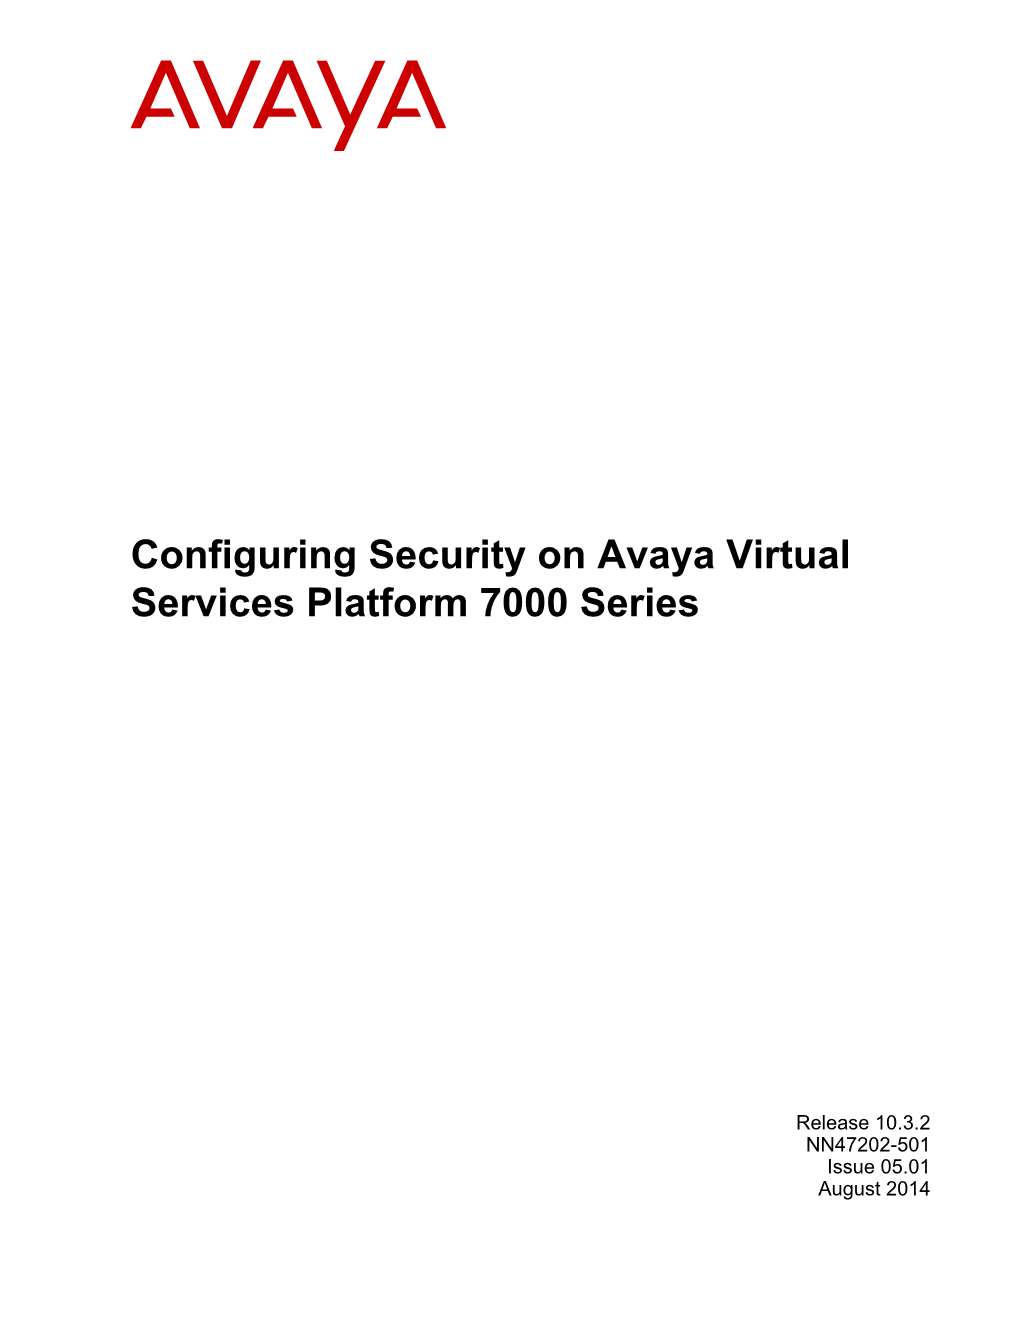 Configuring Security on Avaya Virtual Services Platform 7000 Series